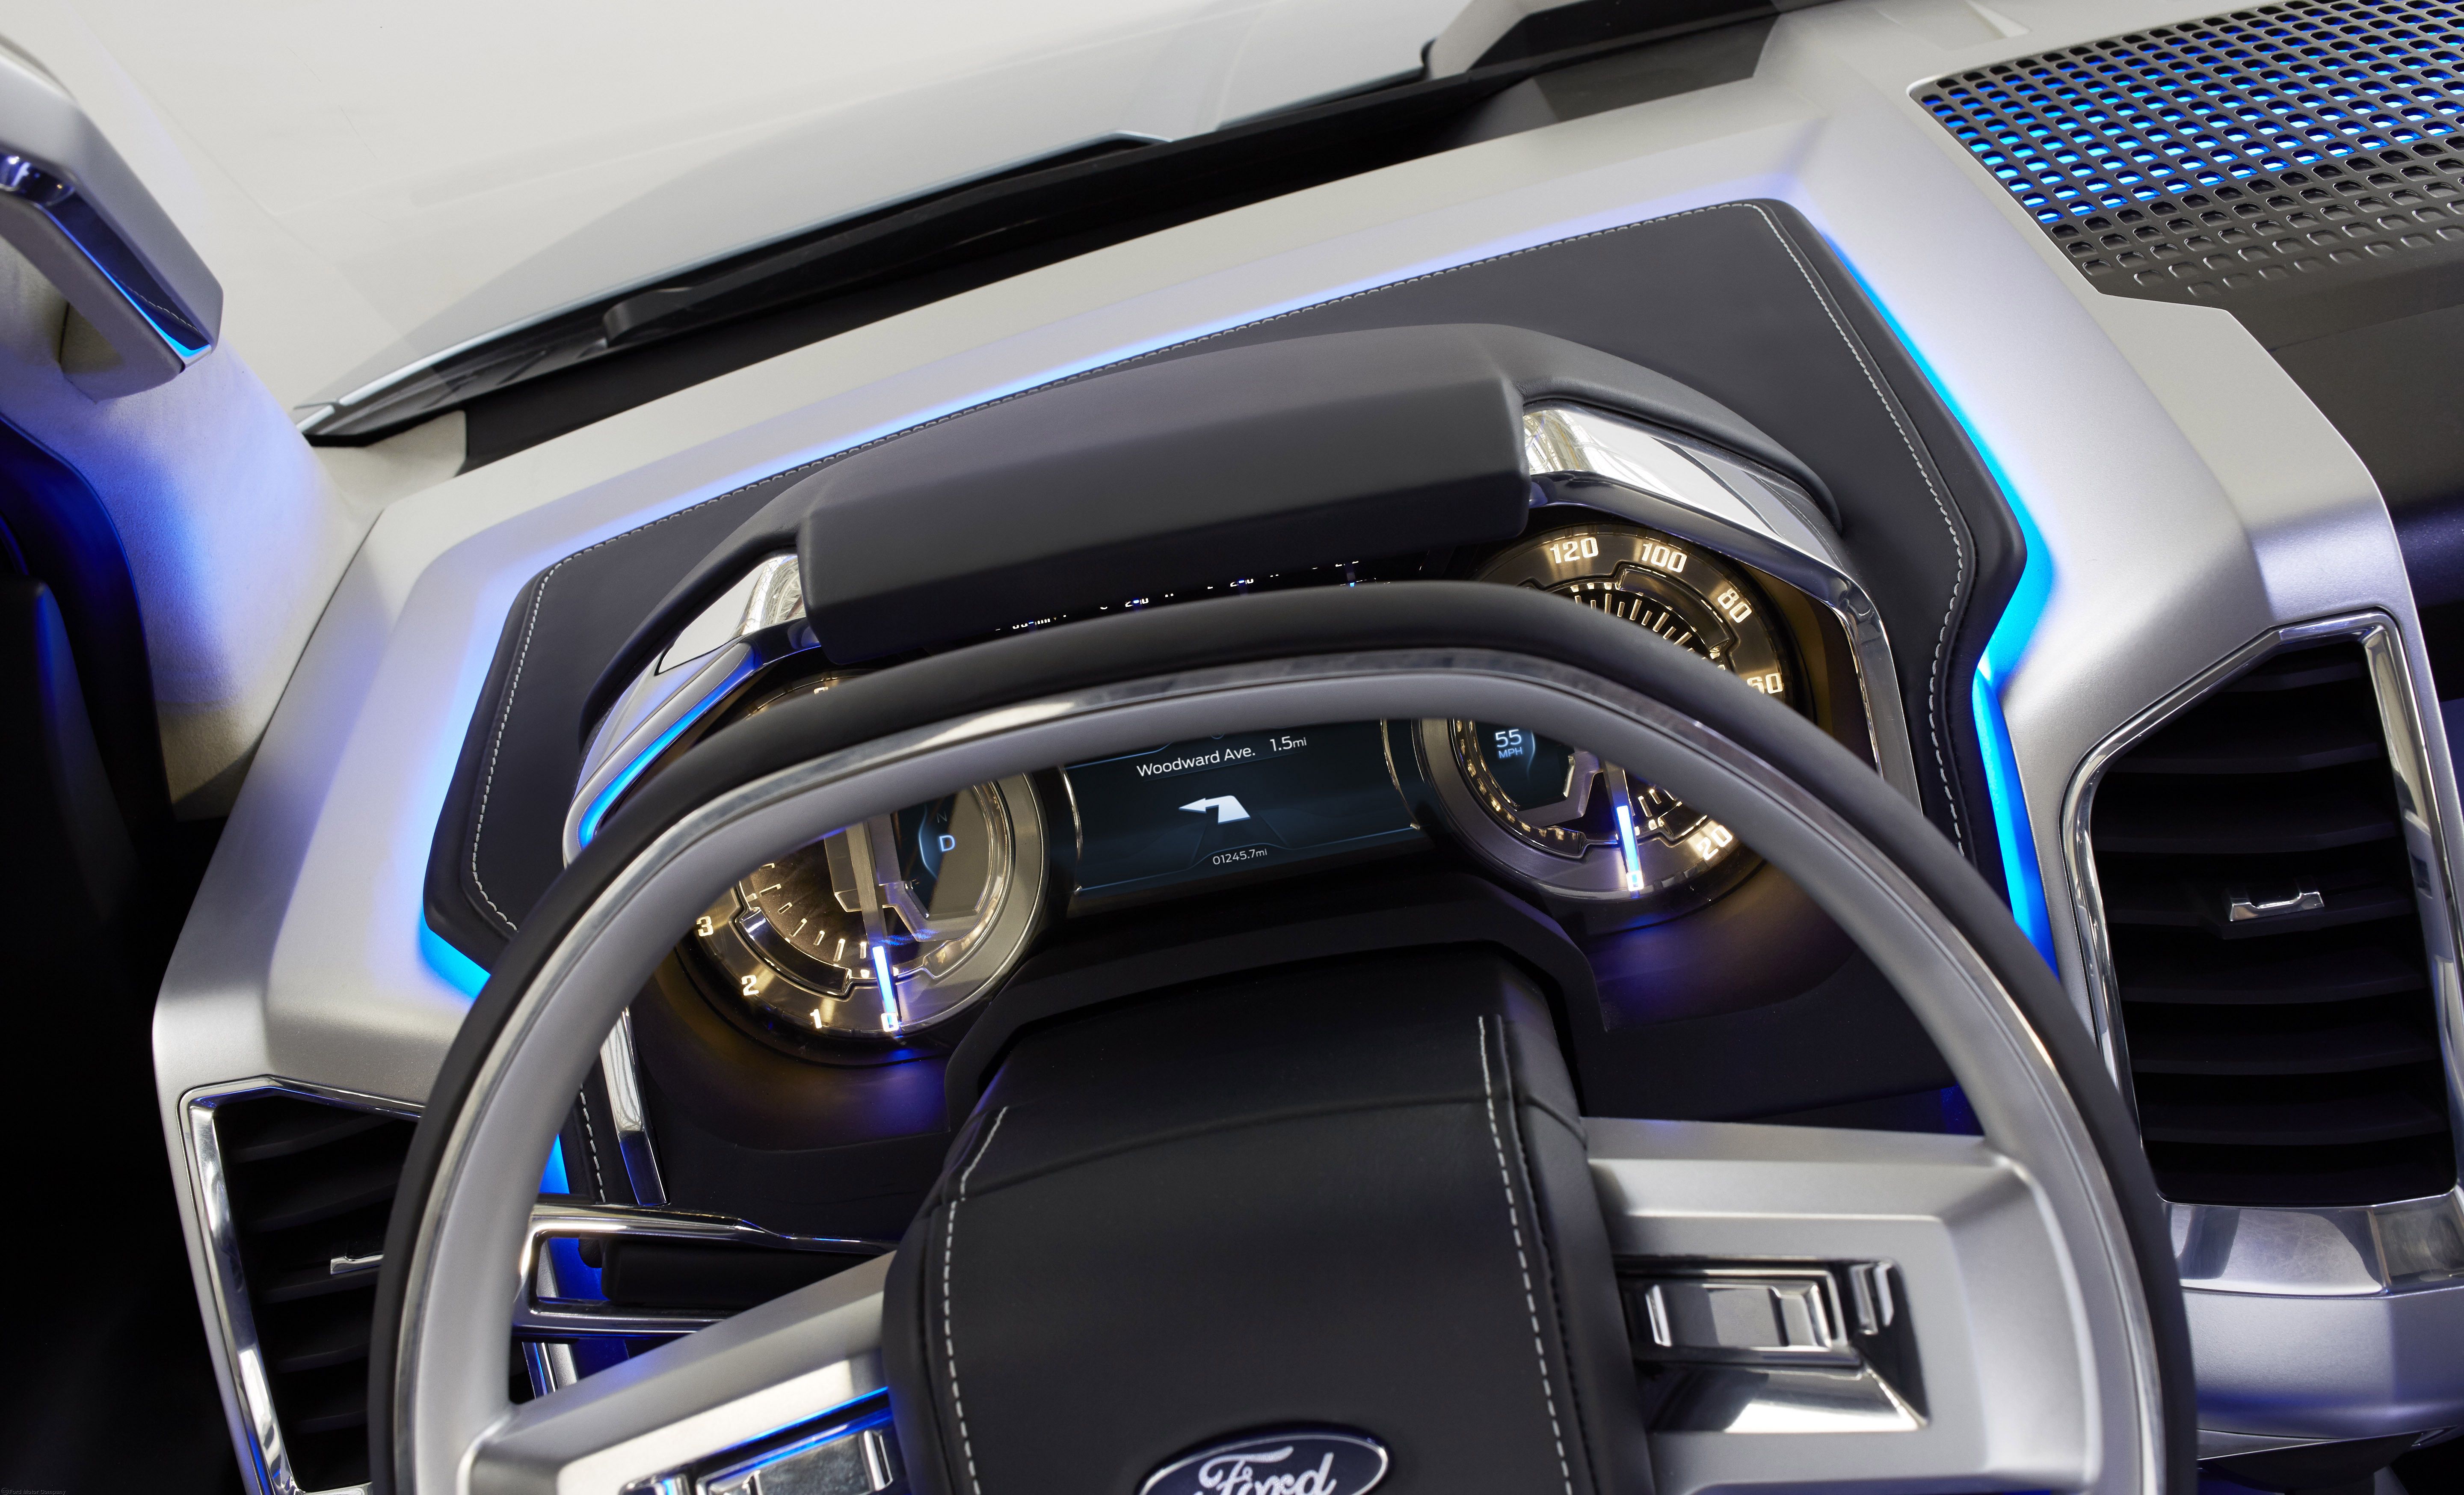 2013 Ford Atlas Concept